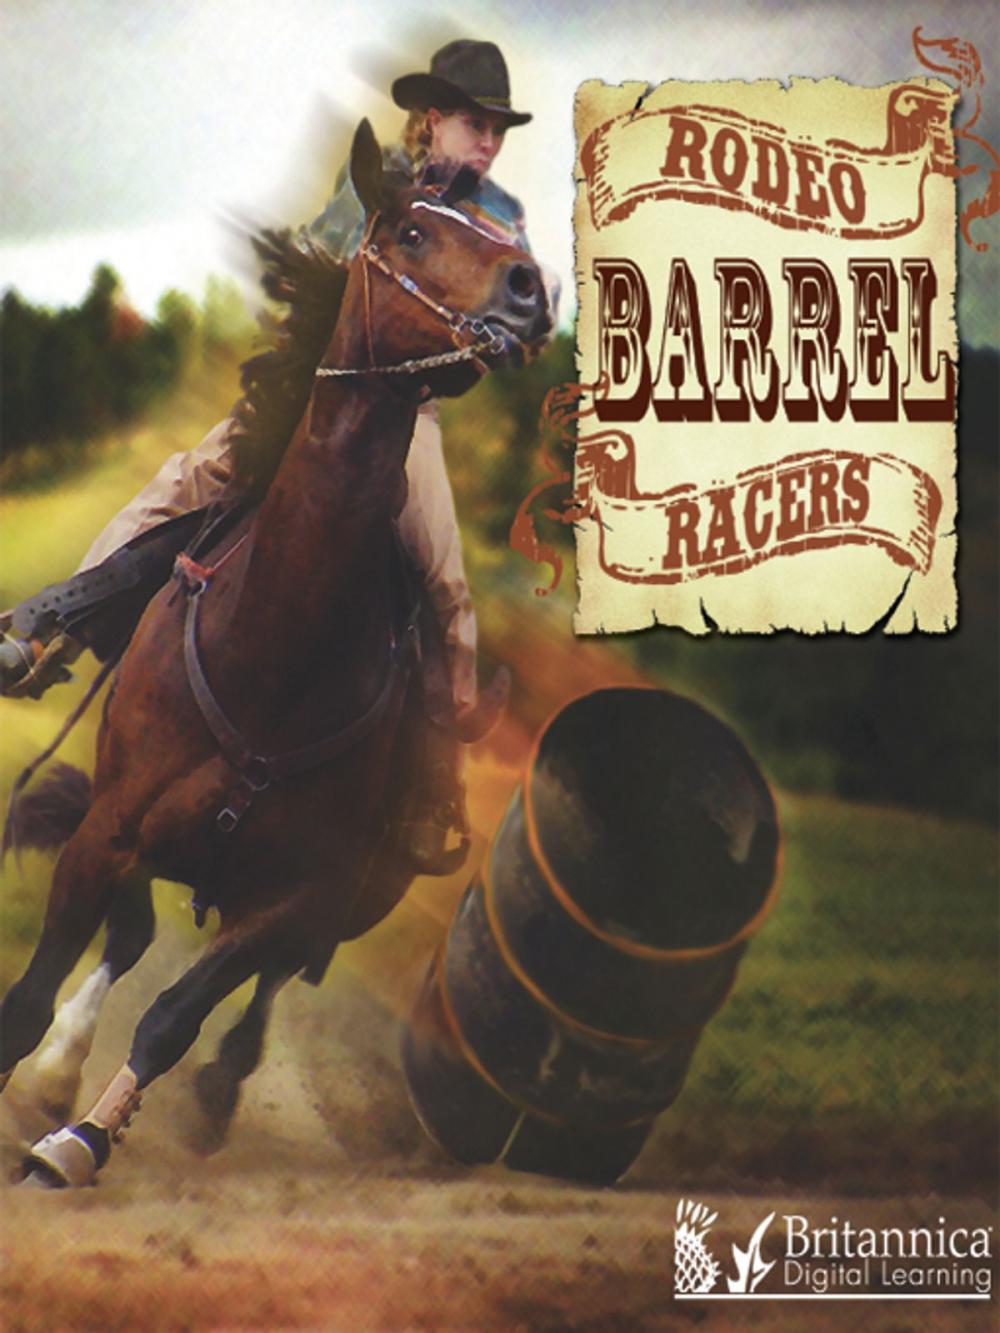 Big bigCover of Rodeo Barrel Racers